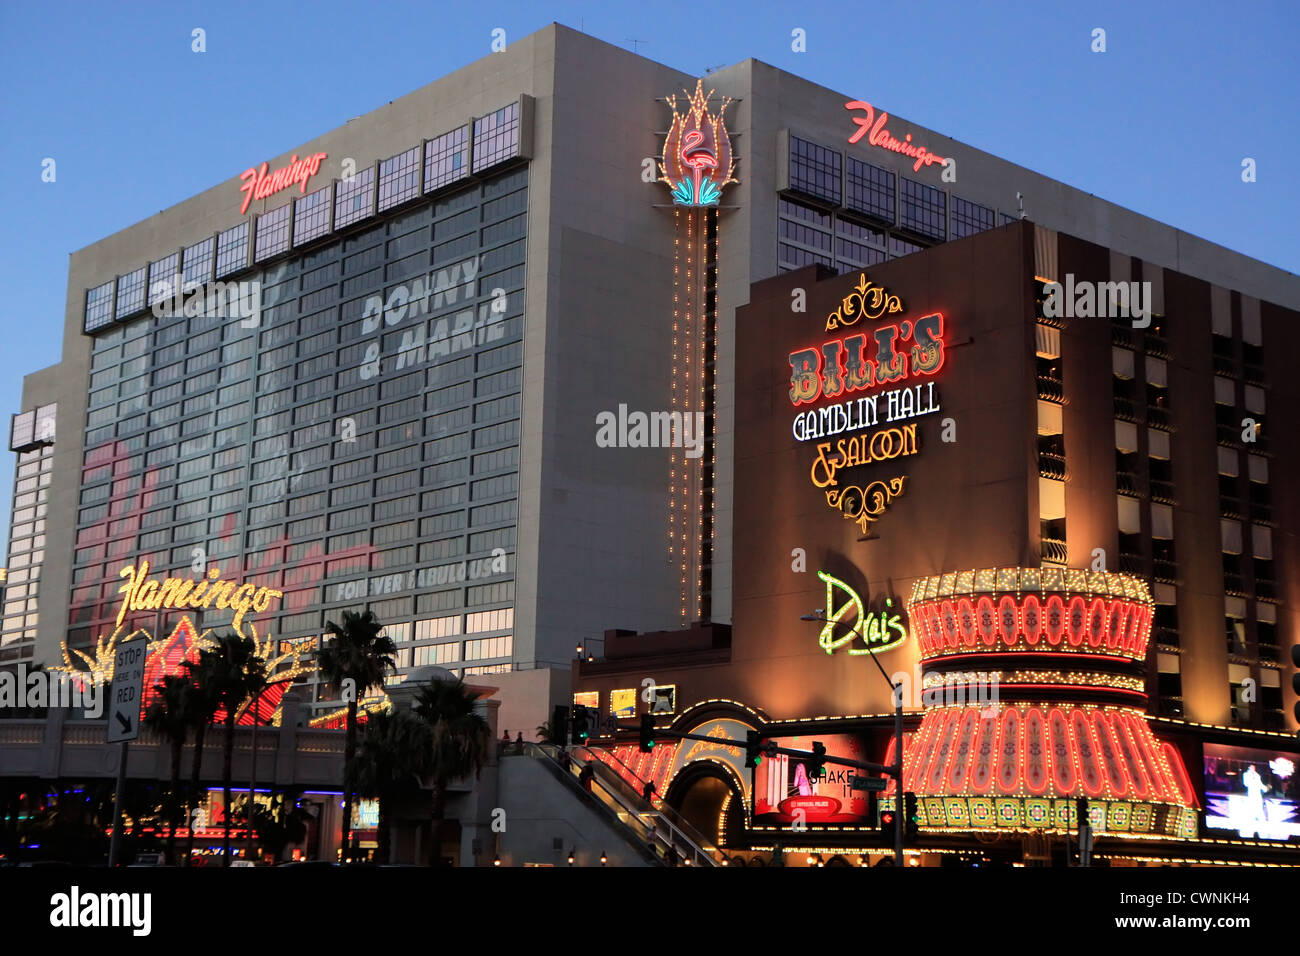 Bills gambling hall saloon las hi-res stock photography and images - Alamy